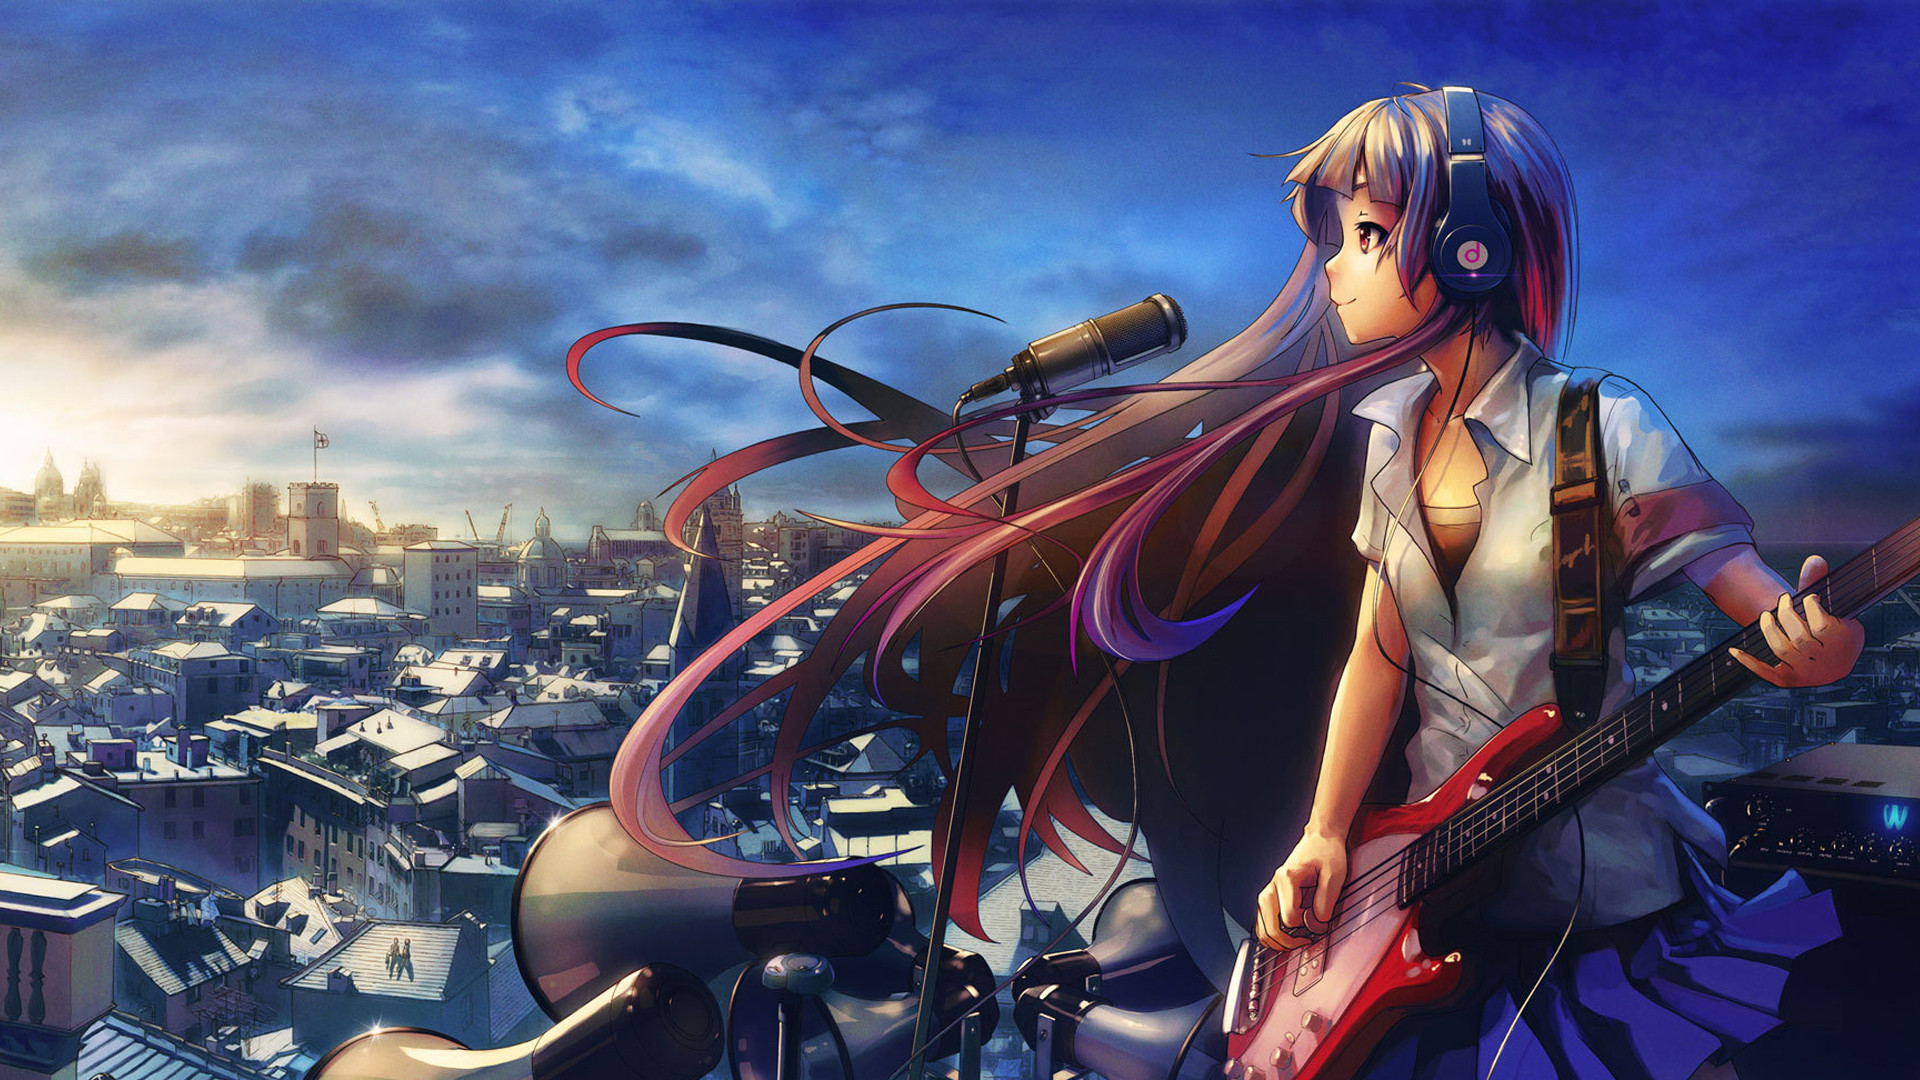 Anime Girl with guitar, Full HD wallpaper, 1080p Full HD Wallpapers